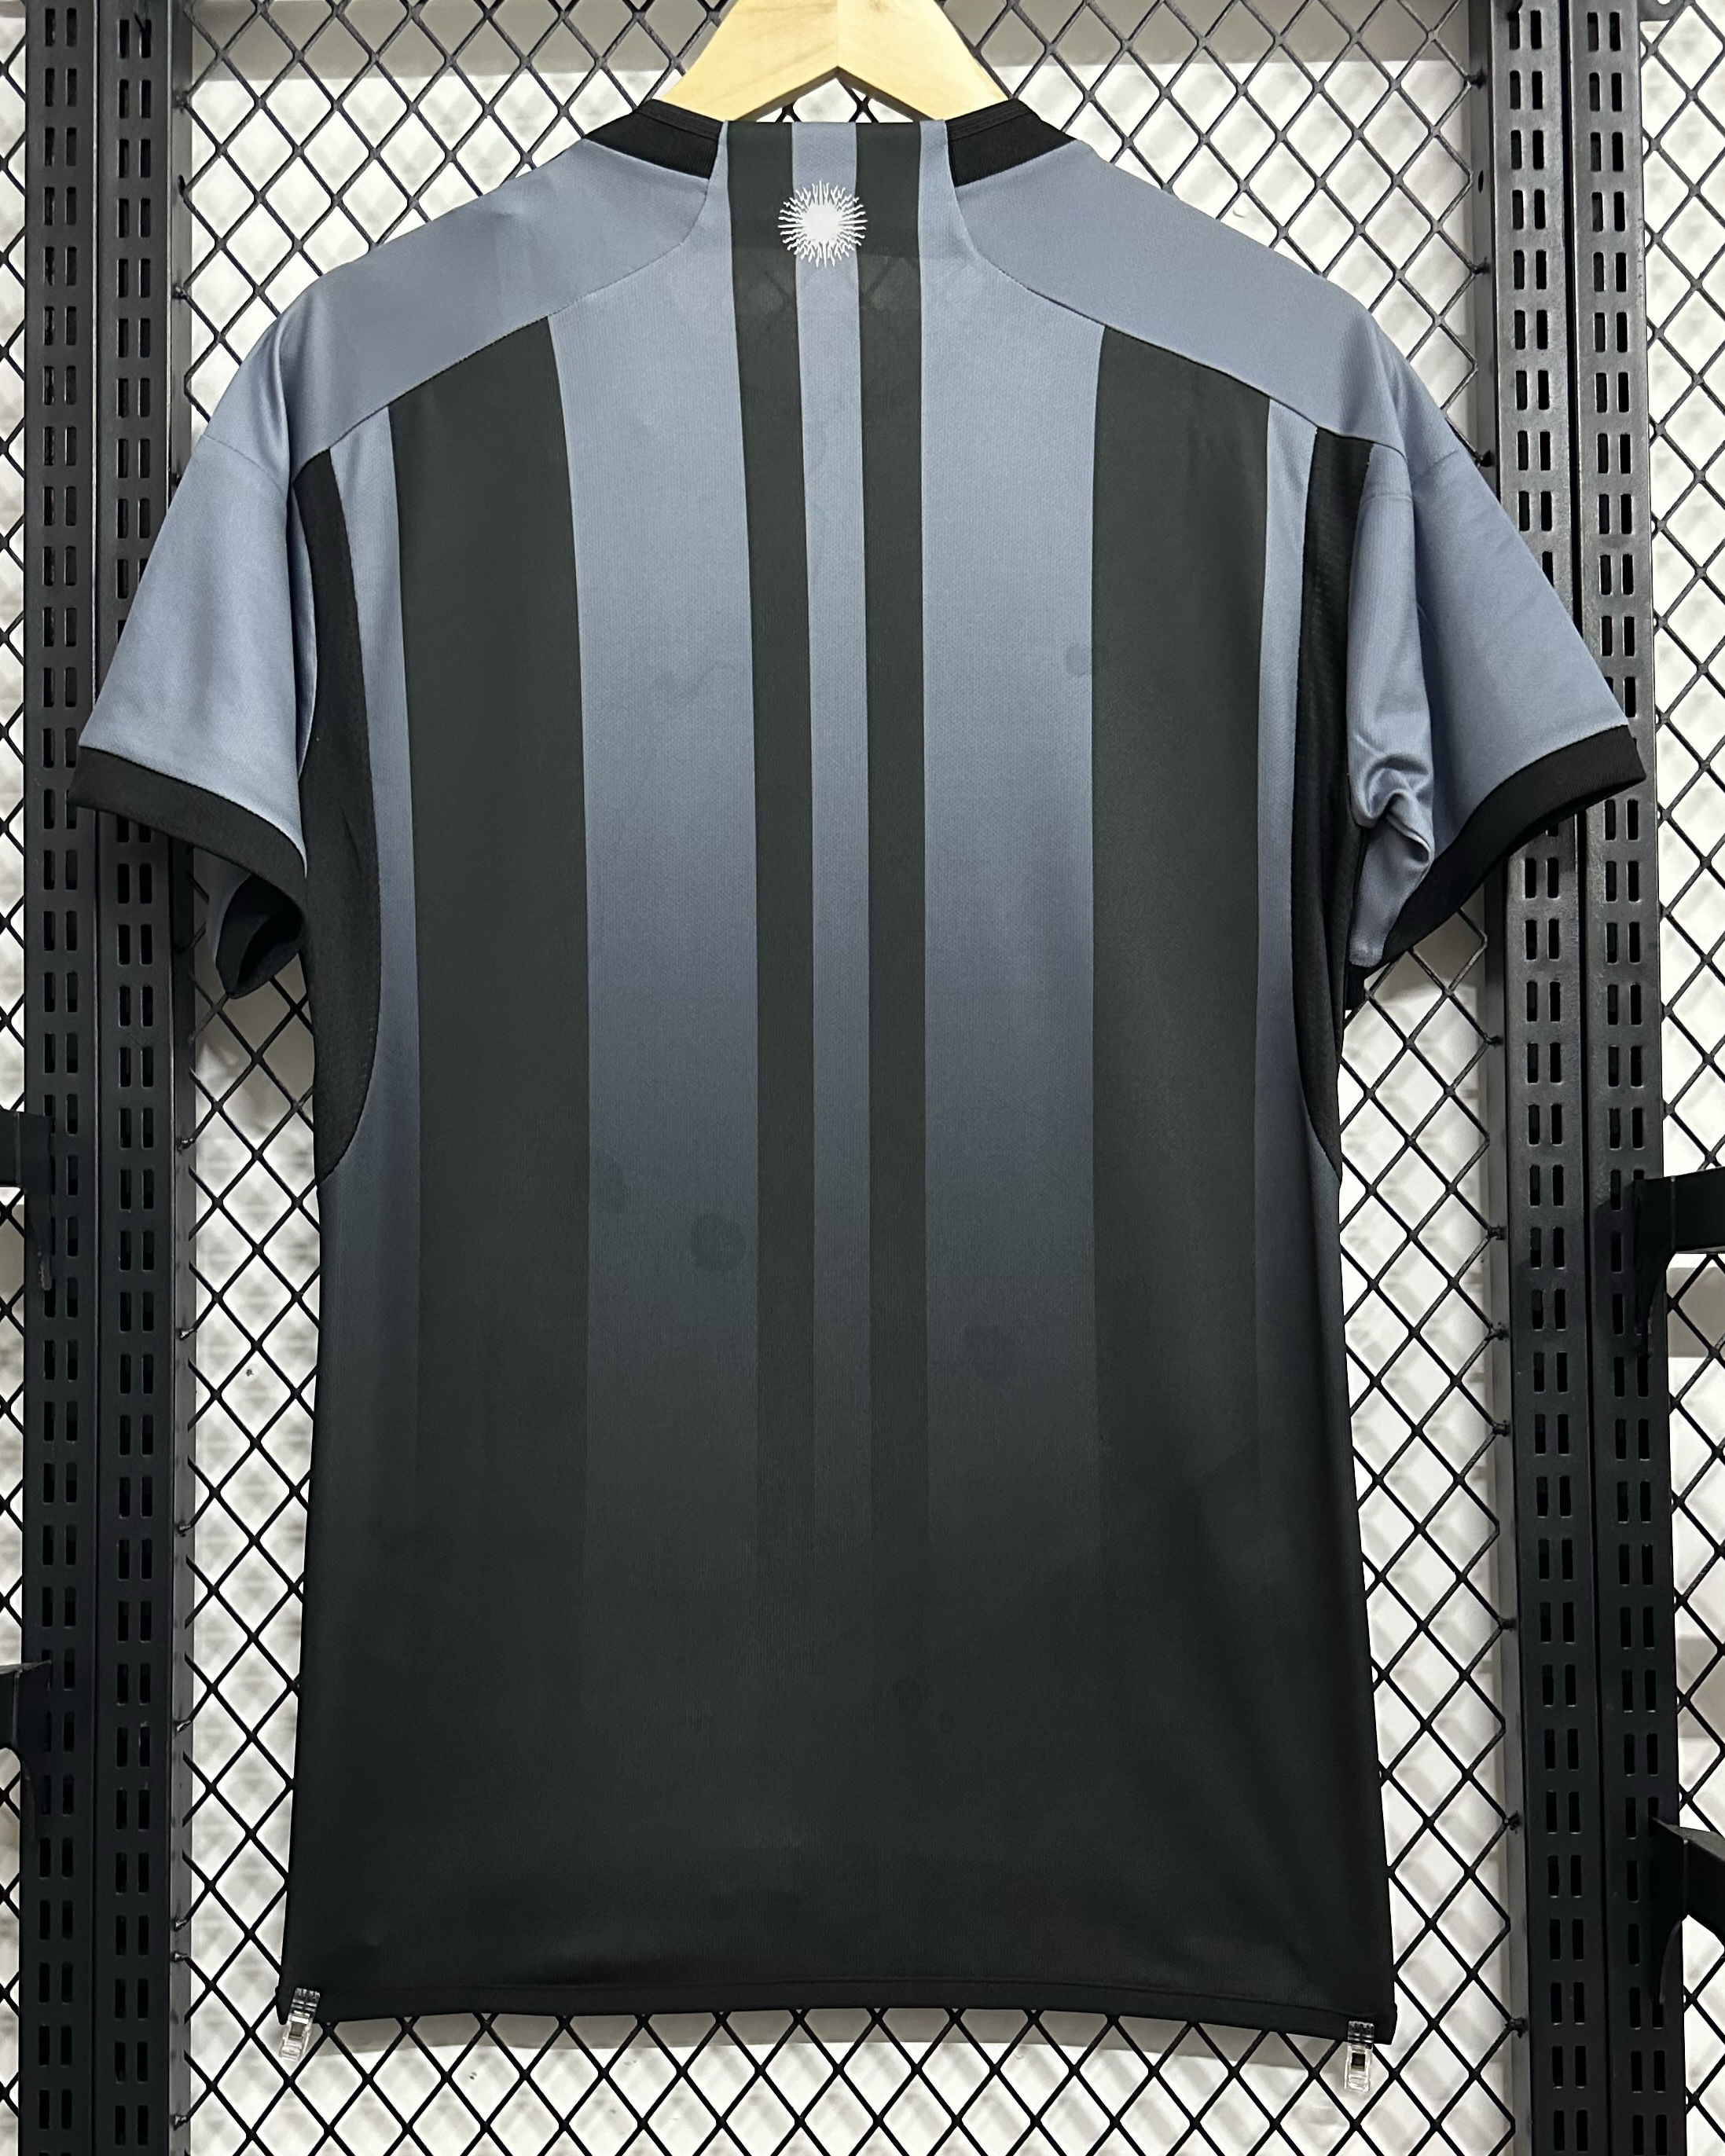 Argentina 2023/24 Special Gray/Black Jersey